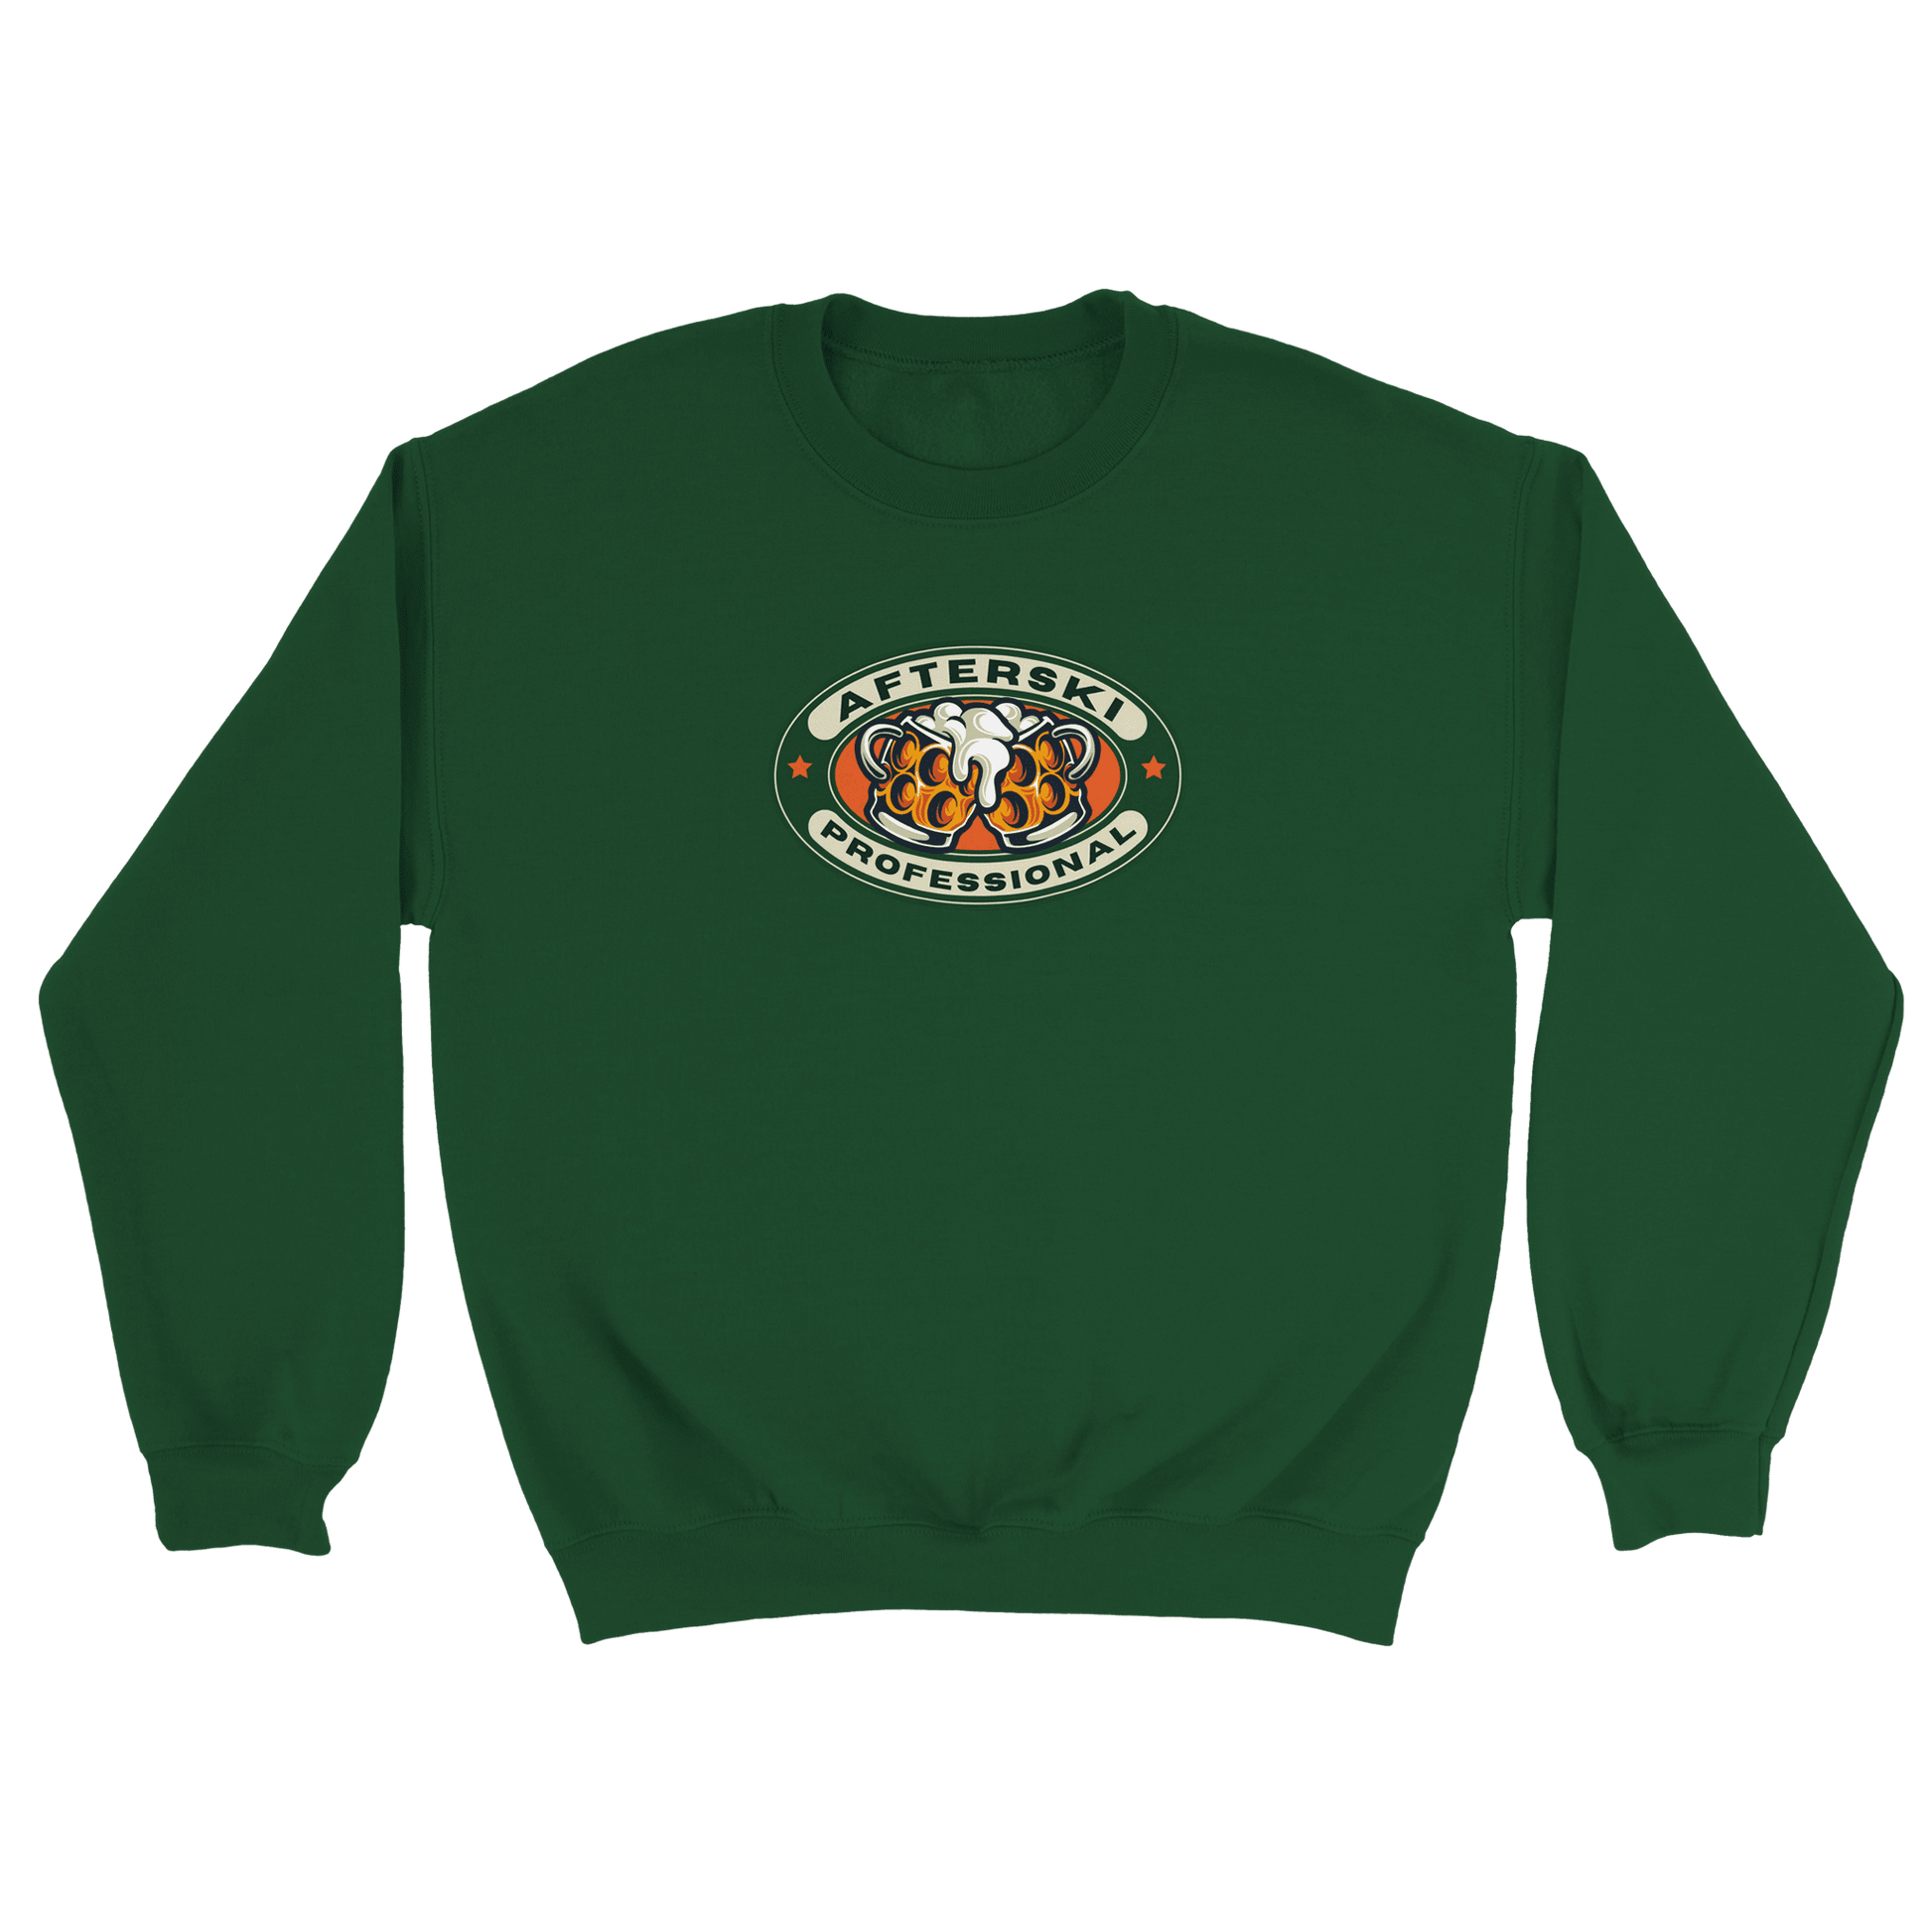 Afterski Professional - Sweatshirt Mossgrön